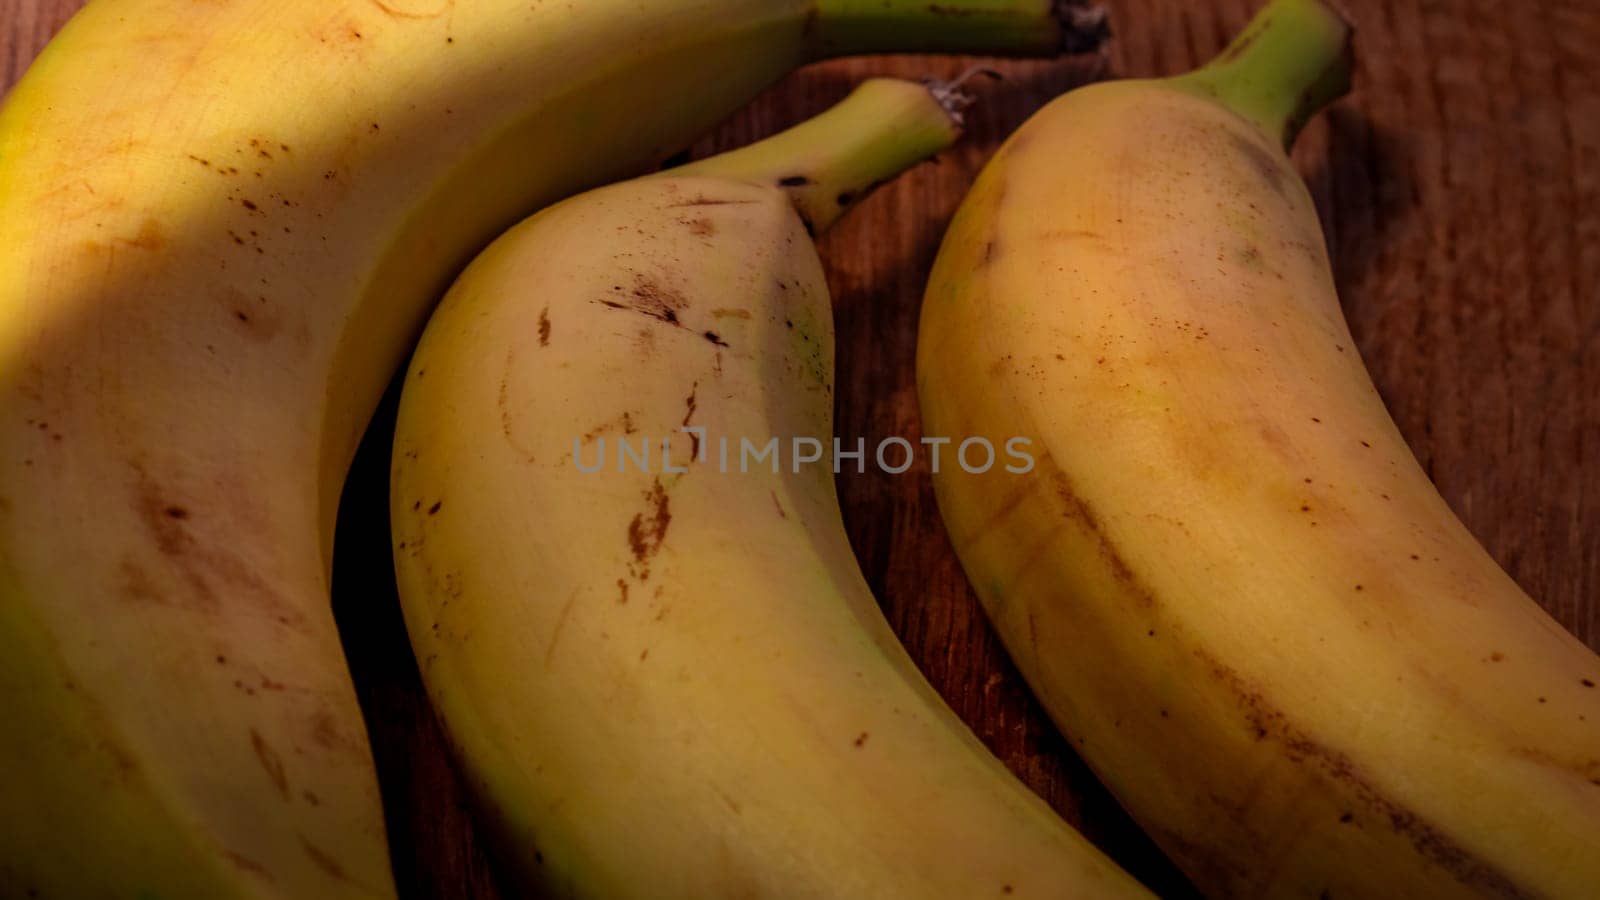 Fresh ripe bananas on a wooden board. by vladispas